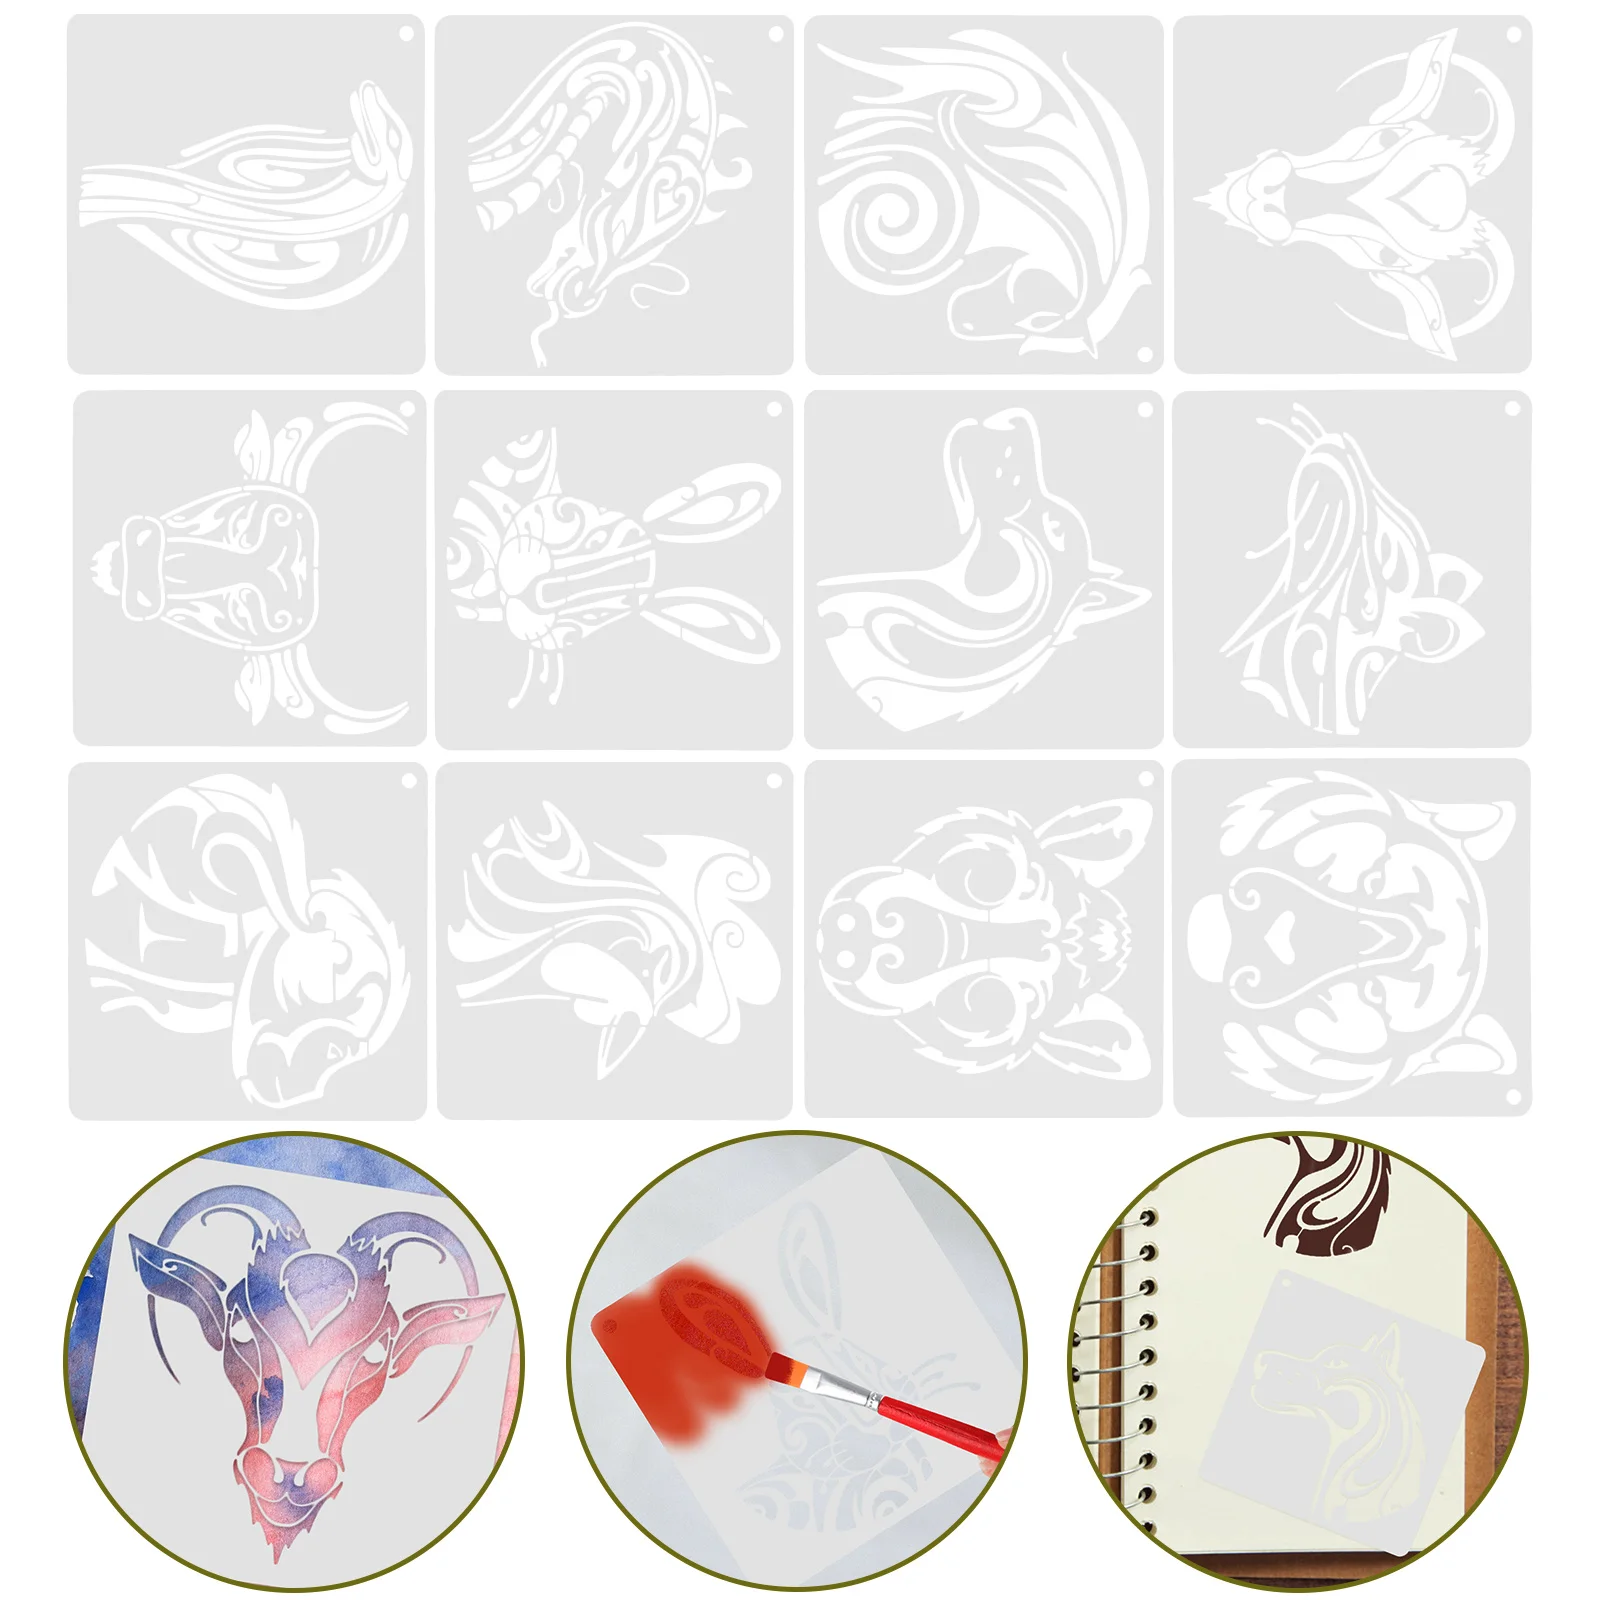 

12 Sheets of Decorative Animal Stencils Delicate Animal Templates Convenient Stencils